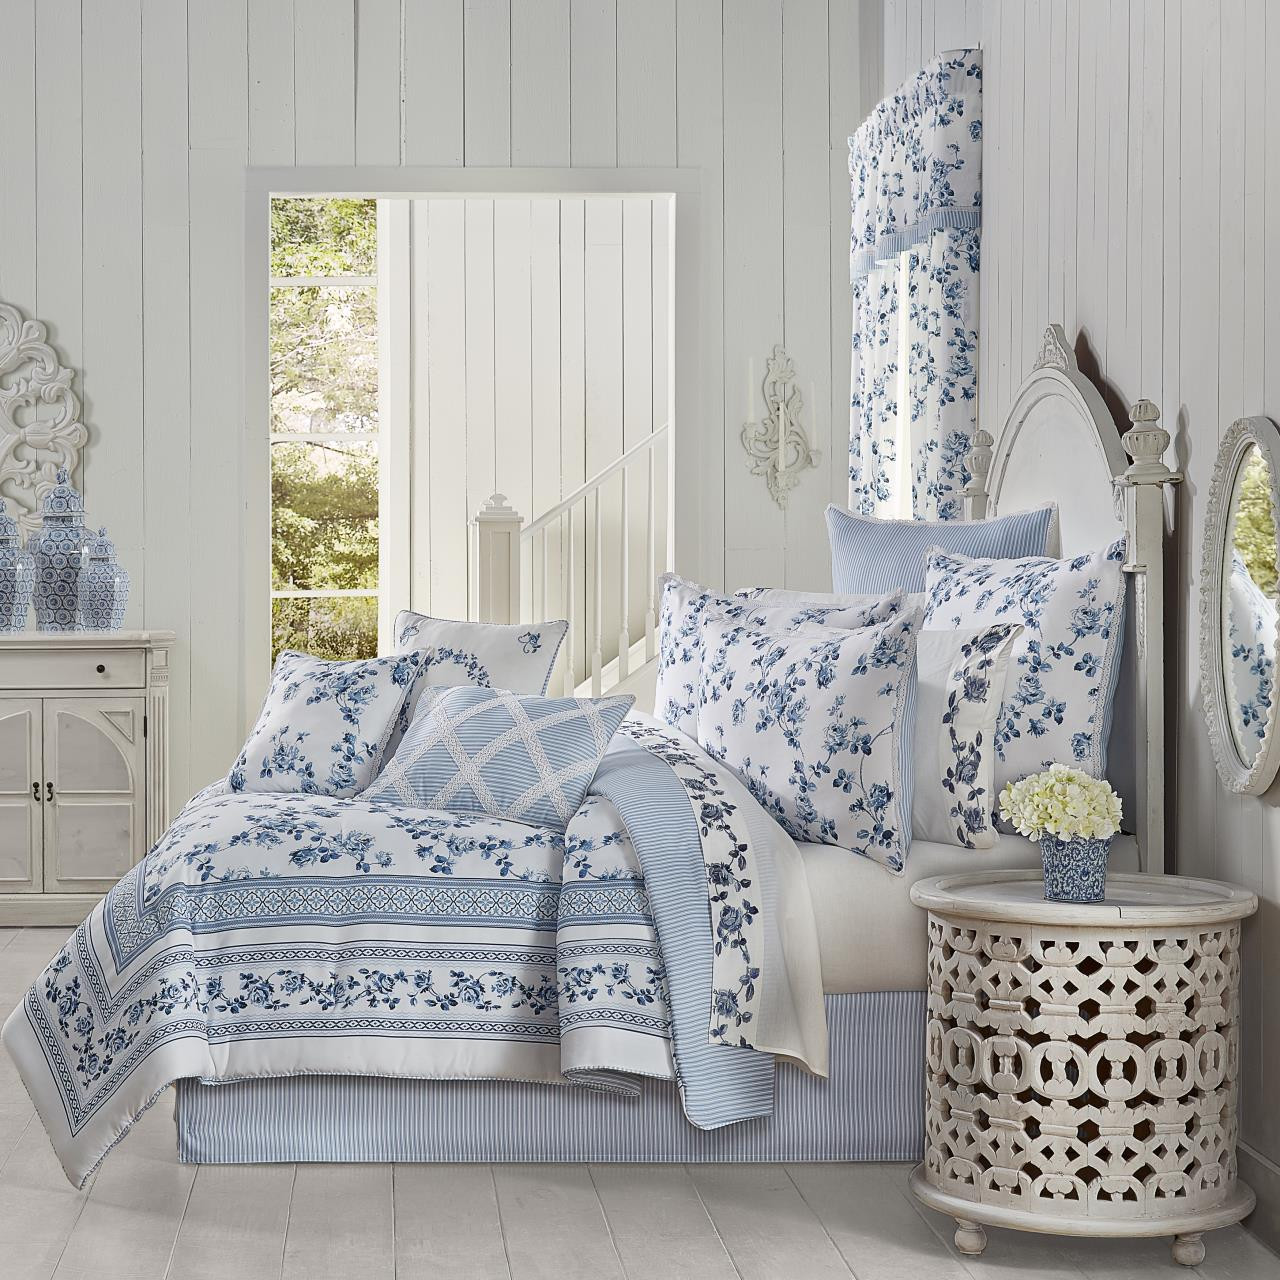 Rialto French Blue Bedding Collection -